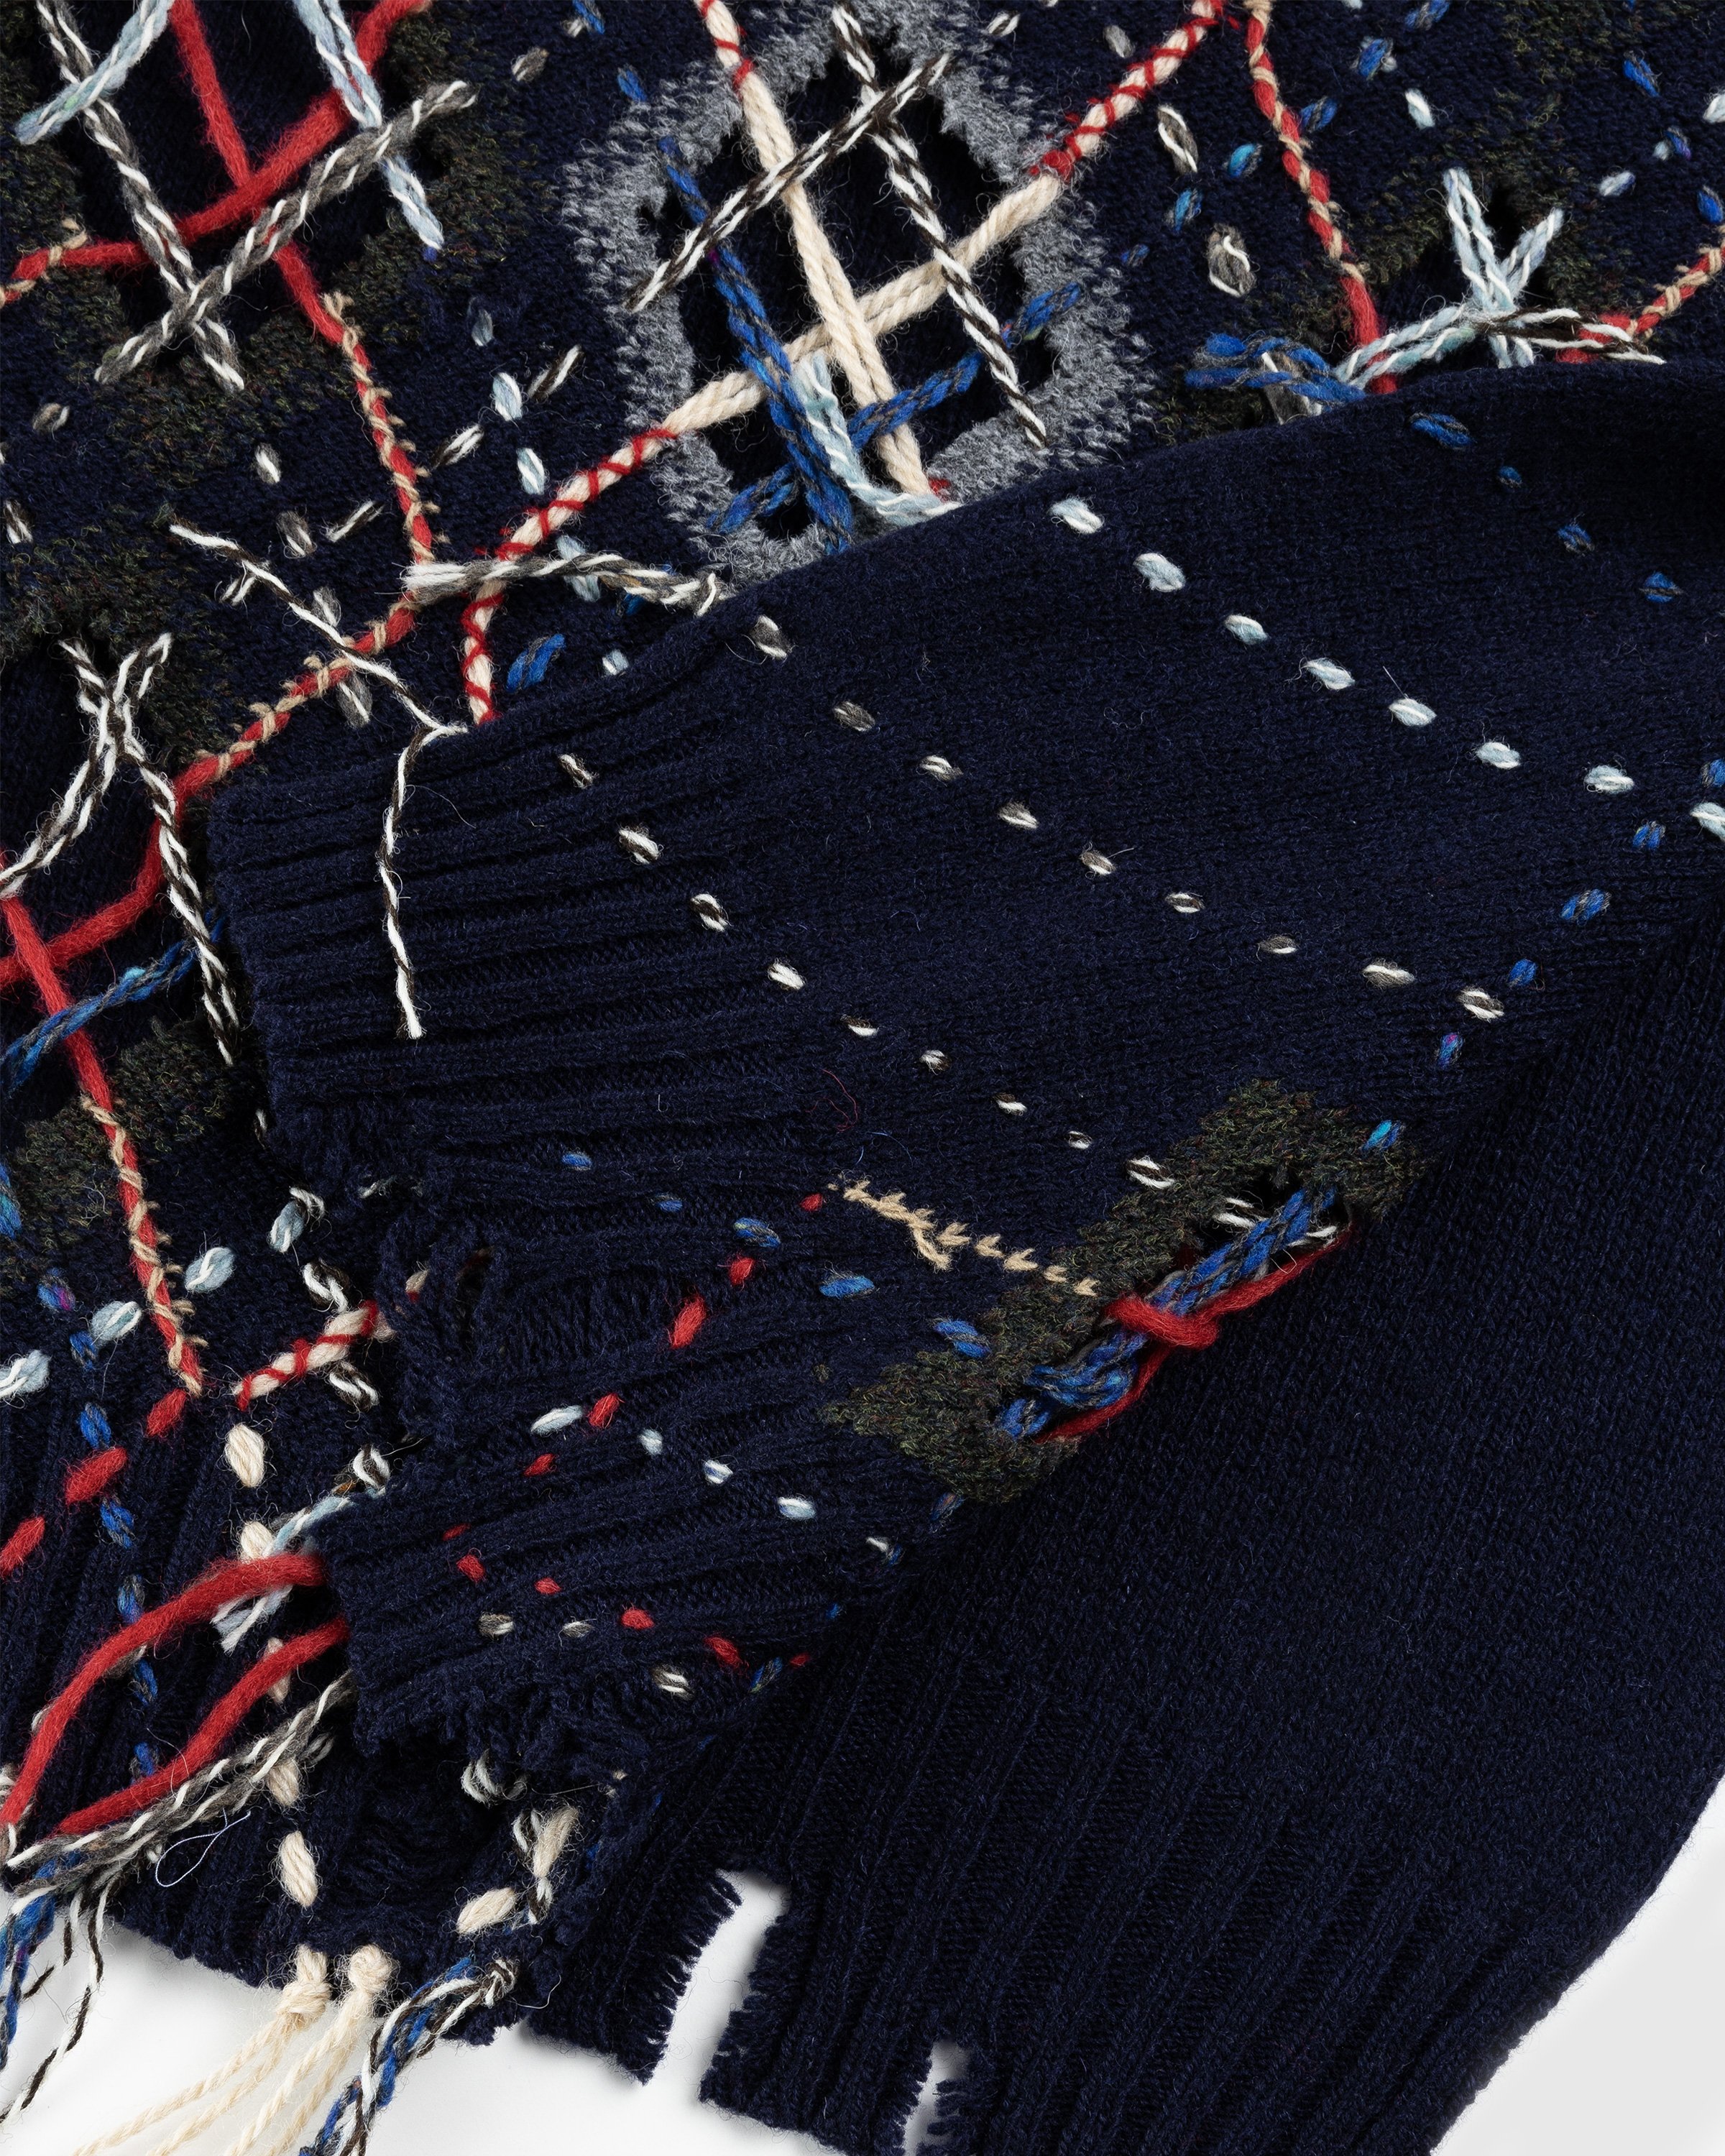 Maison Margiela - Distressed Wool Crewneck Sweater Multi - Clothing - Multi - Image 5